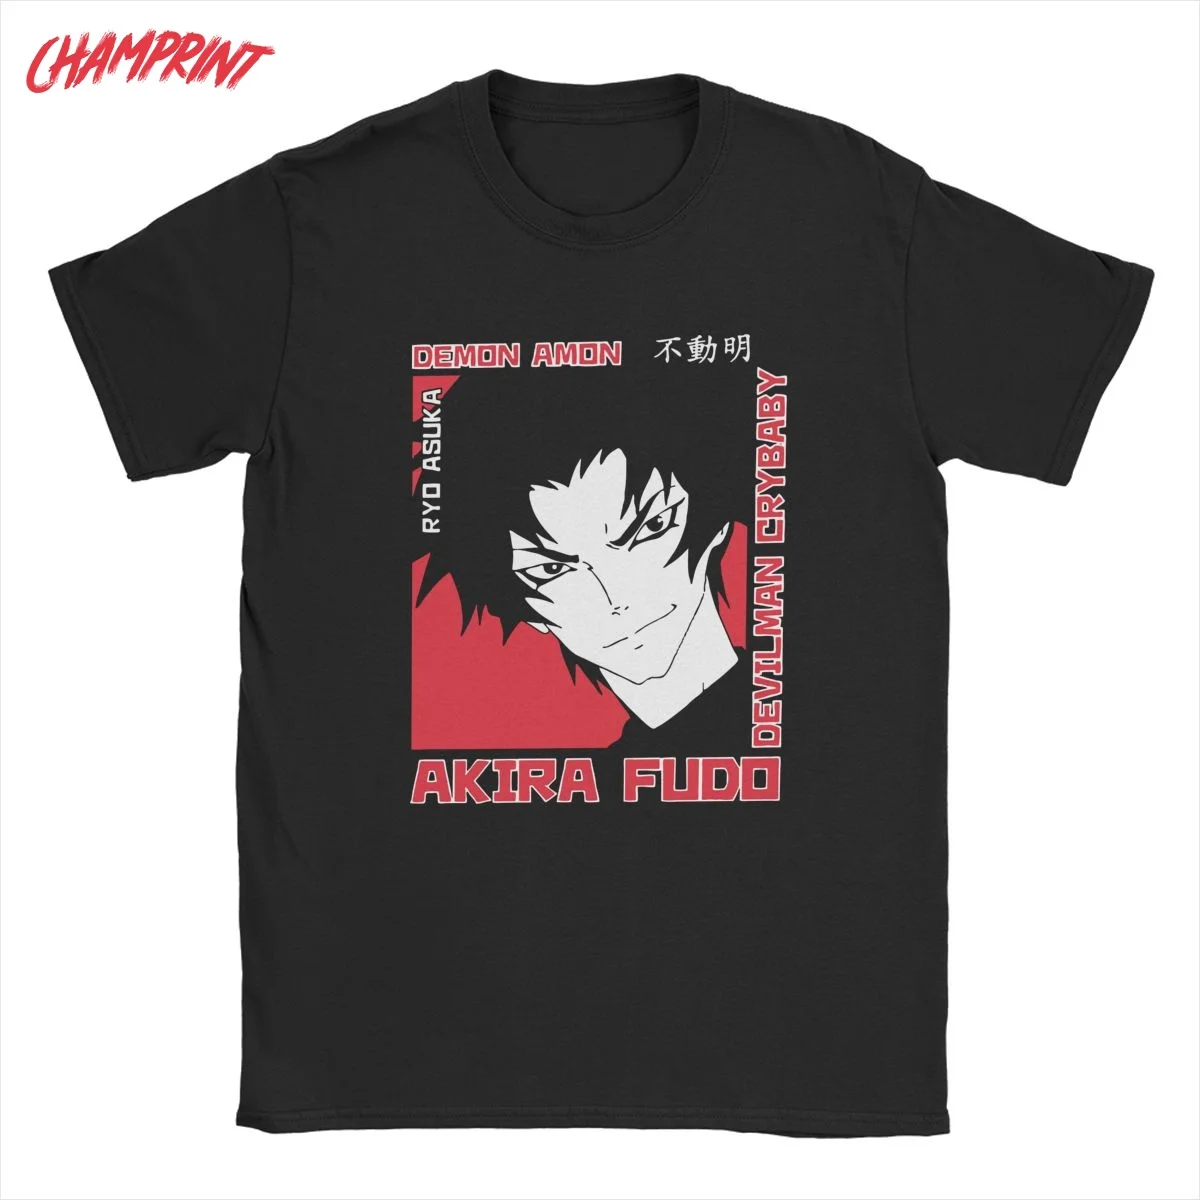 

Devilman Crybaby Akira Fudo T Shirts Men's Cotton Vintage T-Shirts O Neck Anime Manga Tees Short Sleeve Tops Gift Idea